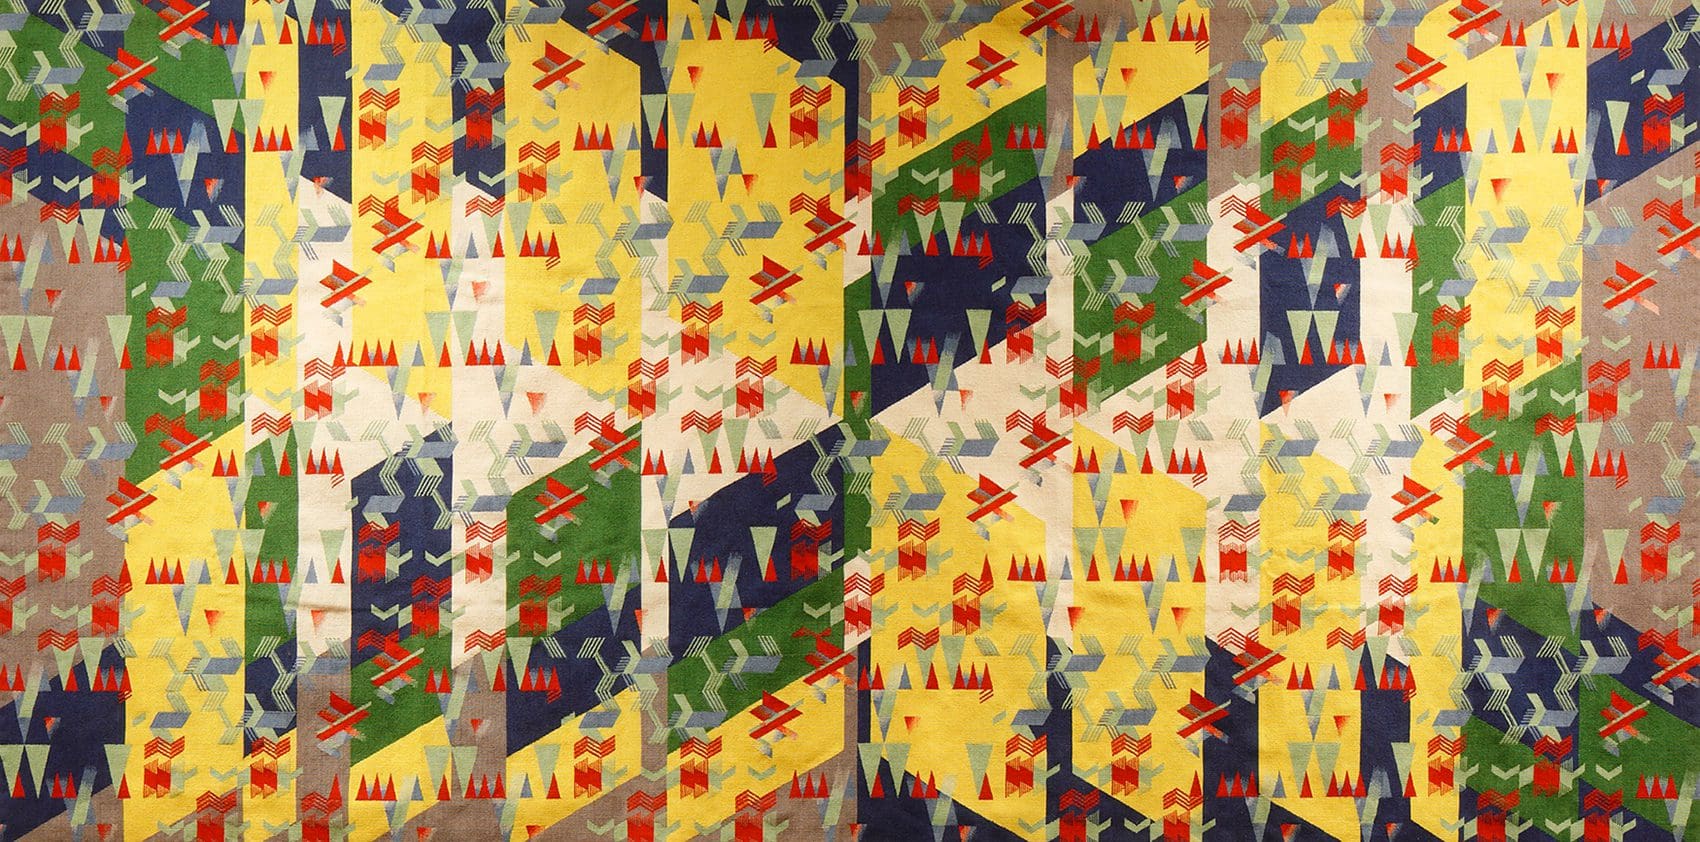 5xWP Tapestry: Bas Van Beek at the Wolfsonian-FIU